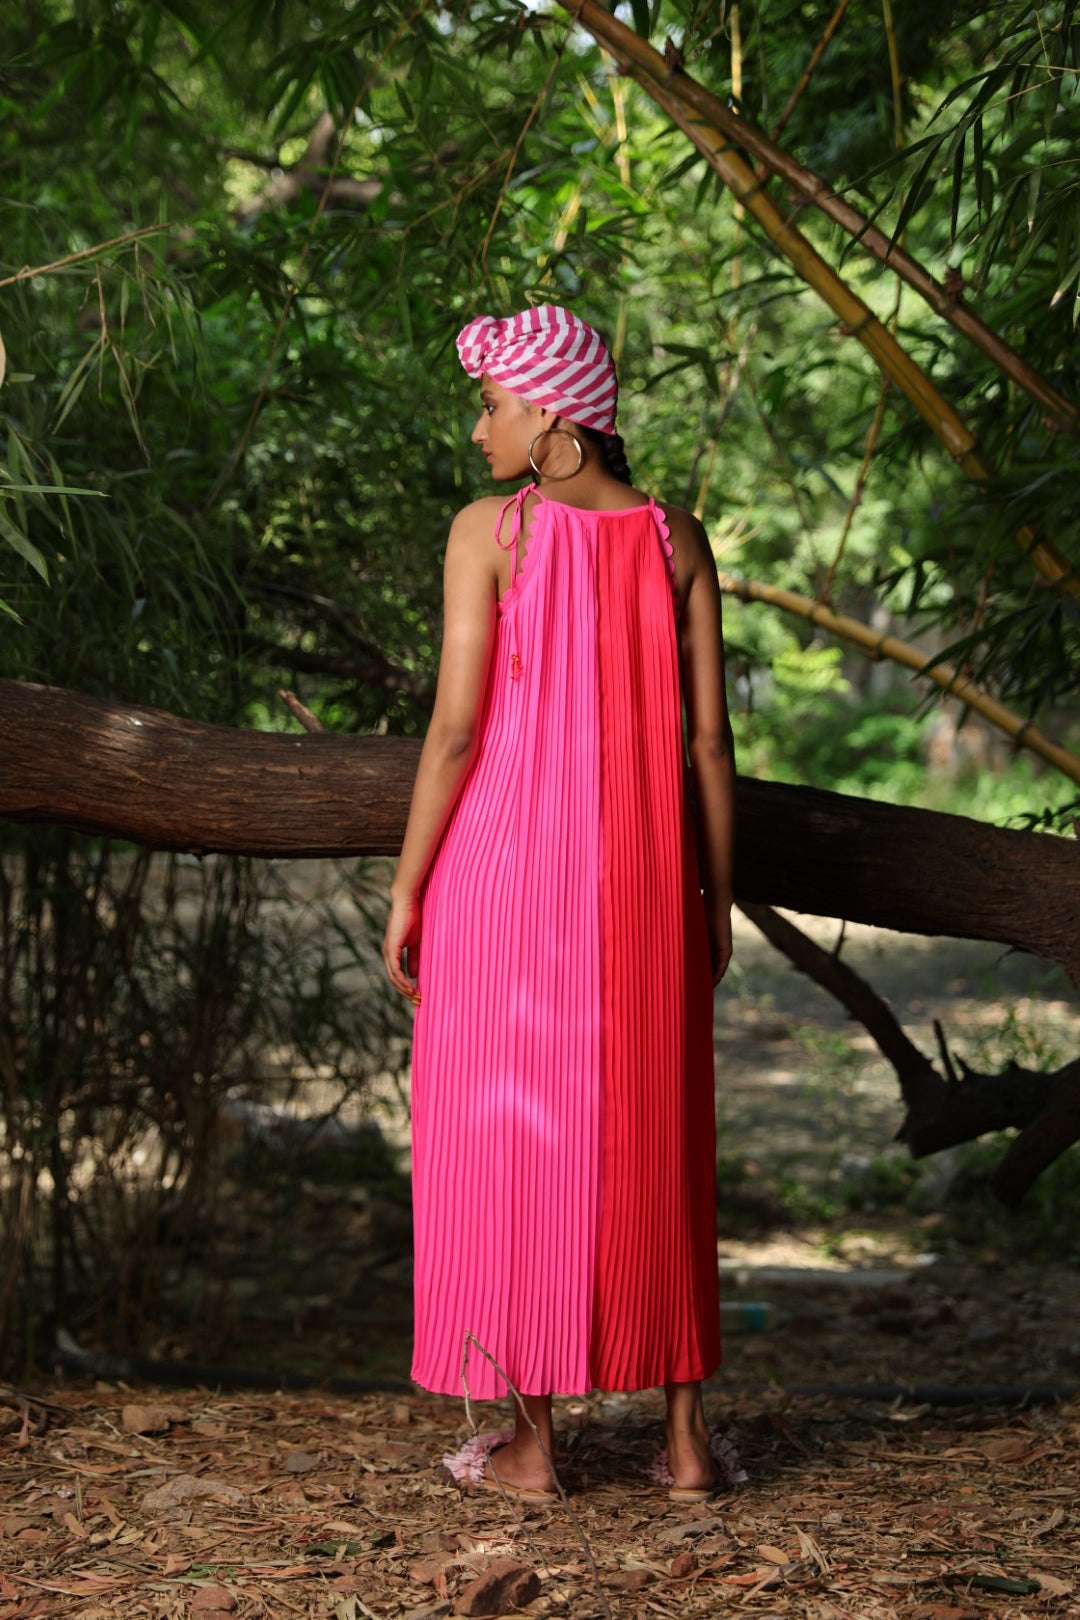 Coral and pink halter georgette dress